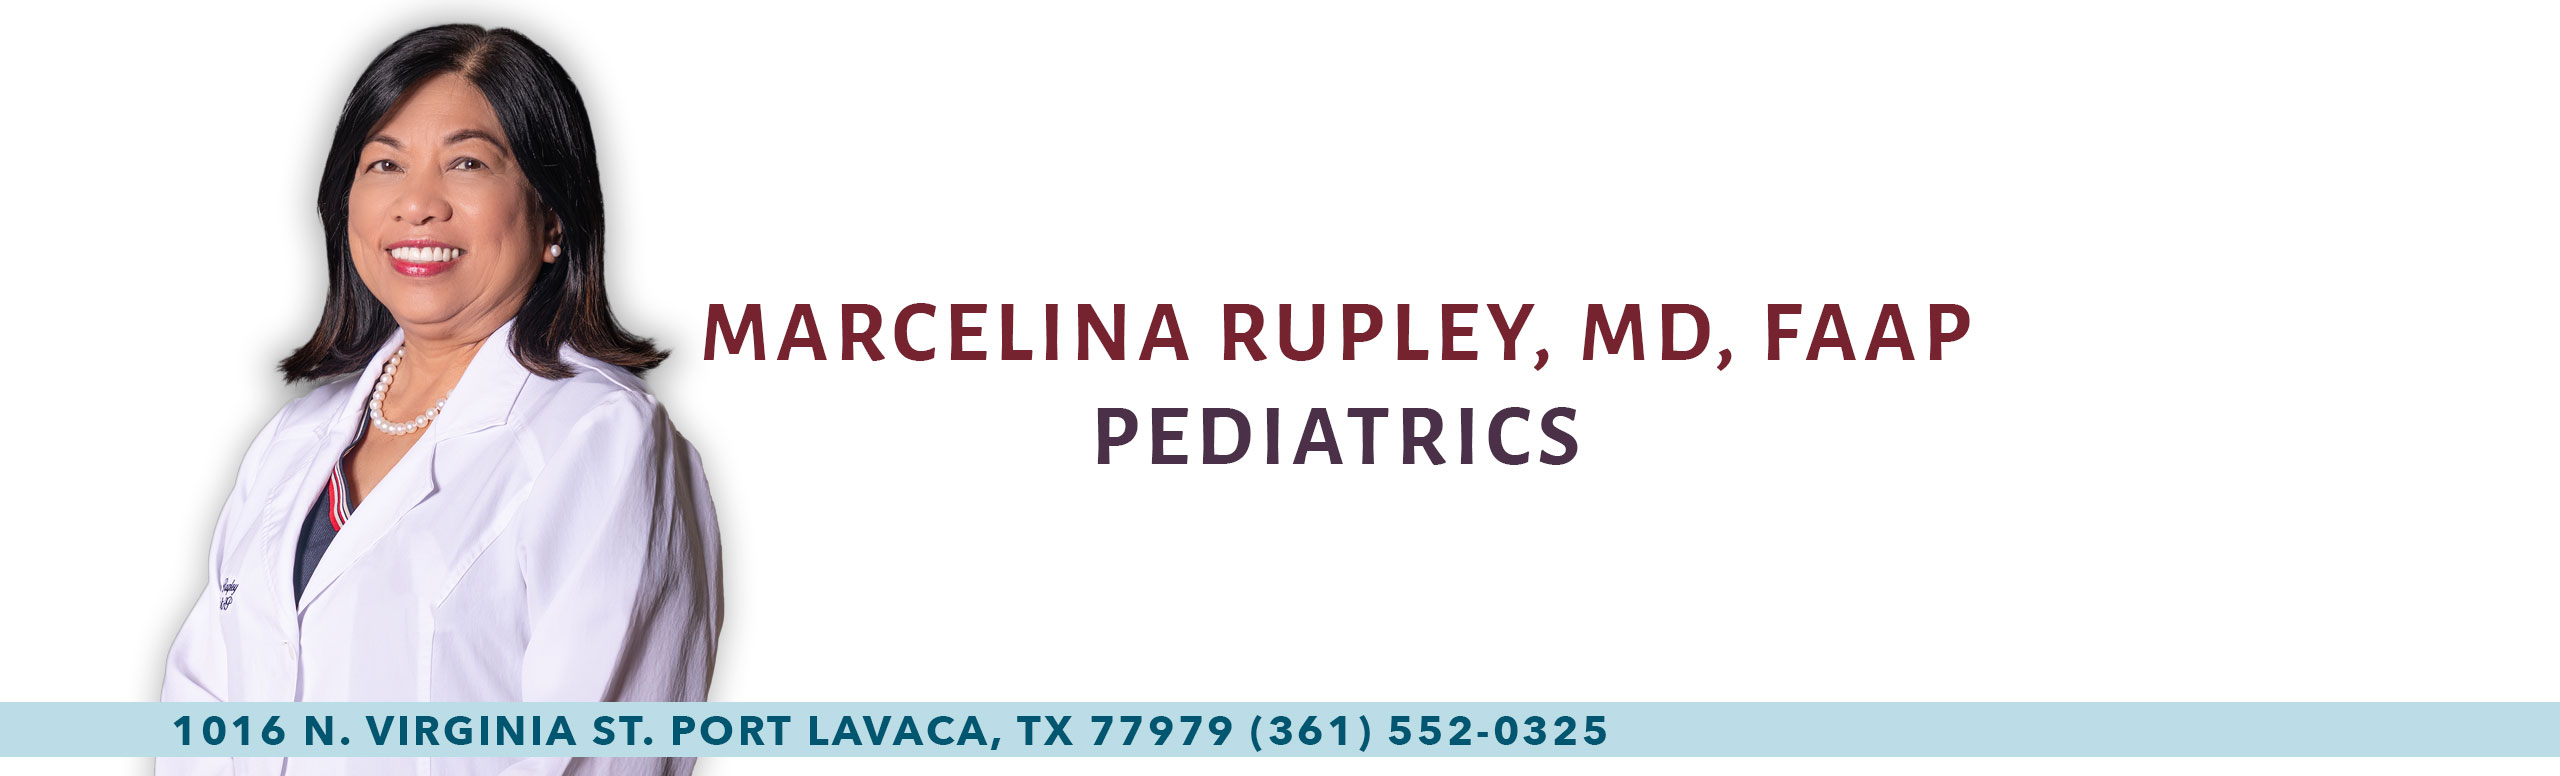 Marcelina Rupley, MD, FAAP
Pediatrics